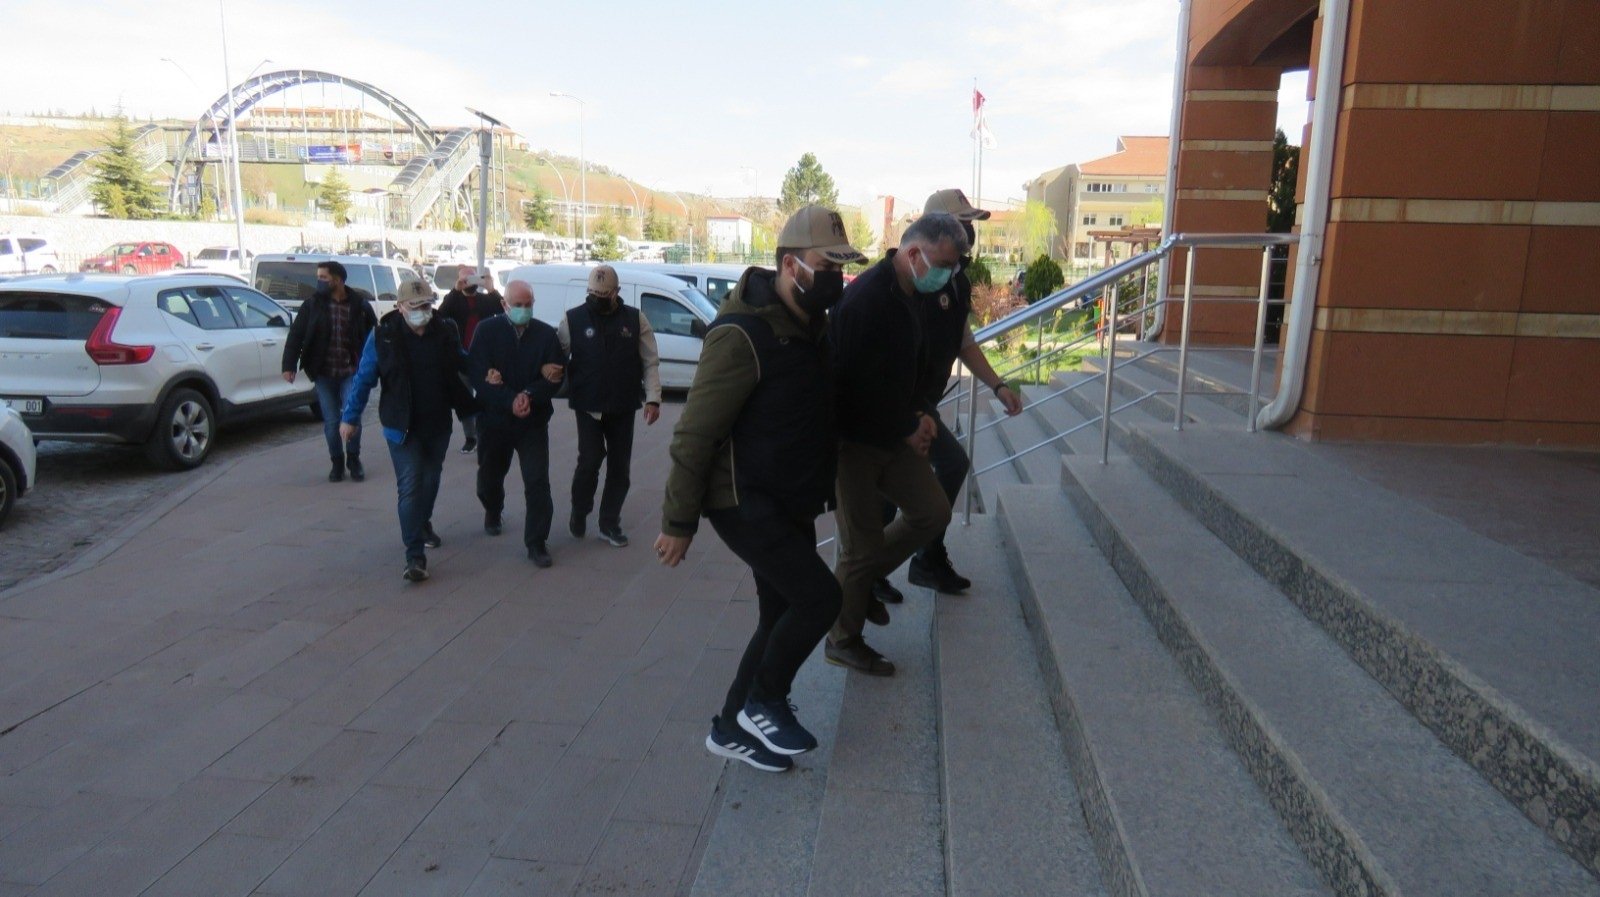 Police escort captured FETÖ suspects, in Çankırı, central Turkey, April 13, 2022. (İHA PHOTO)